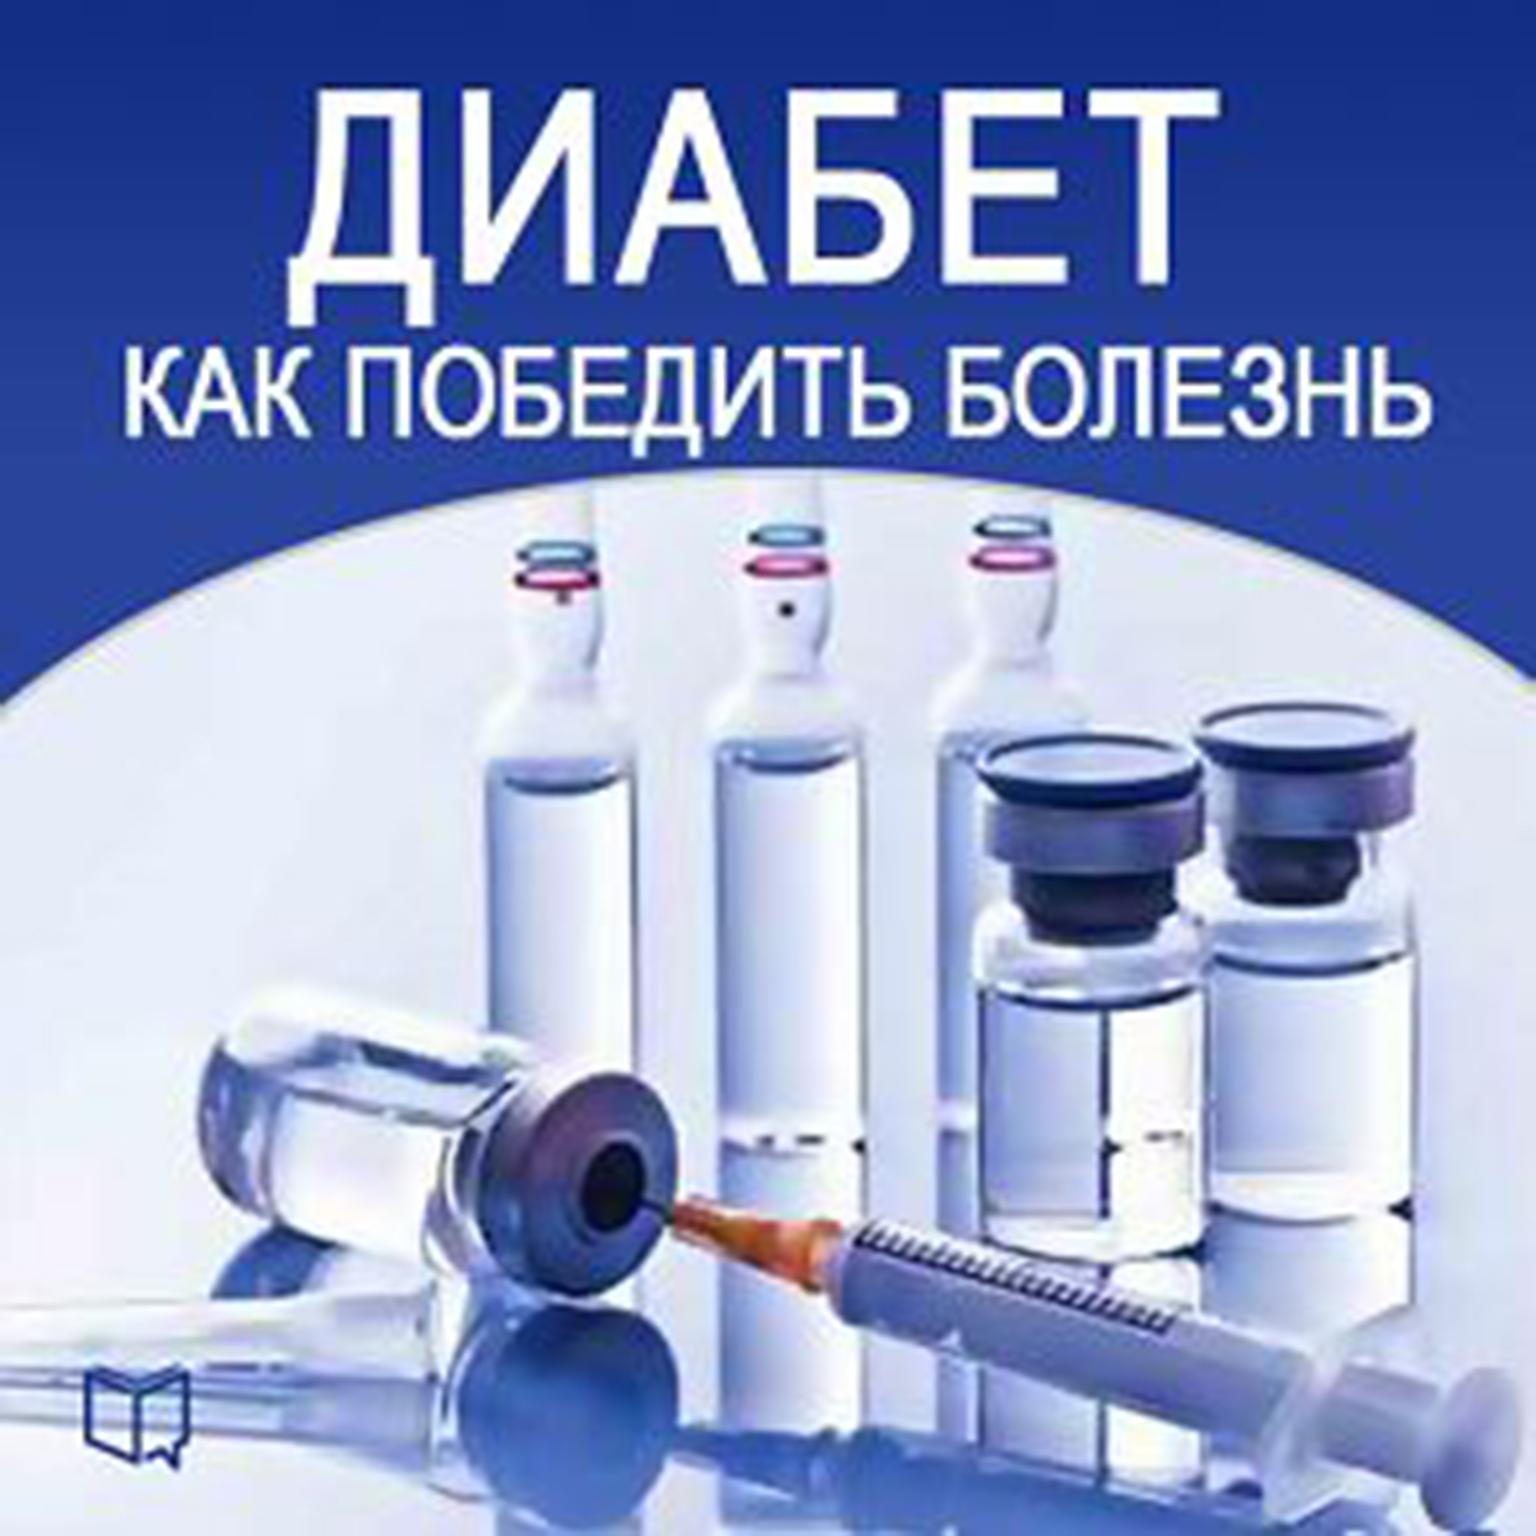 How to Beat Diabetes [Russian Edition] Audiobook, by Konstantin Ivanovskij